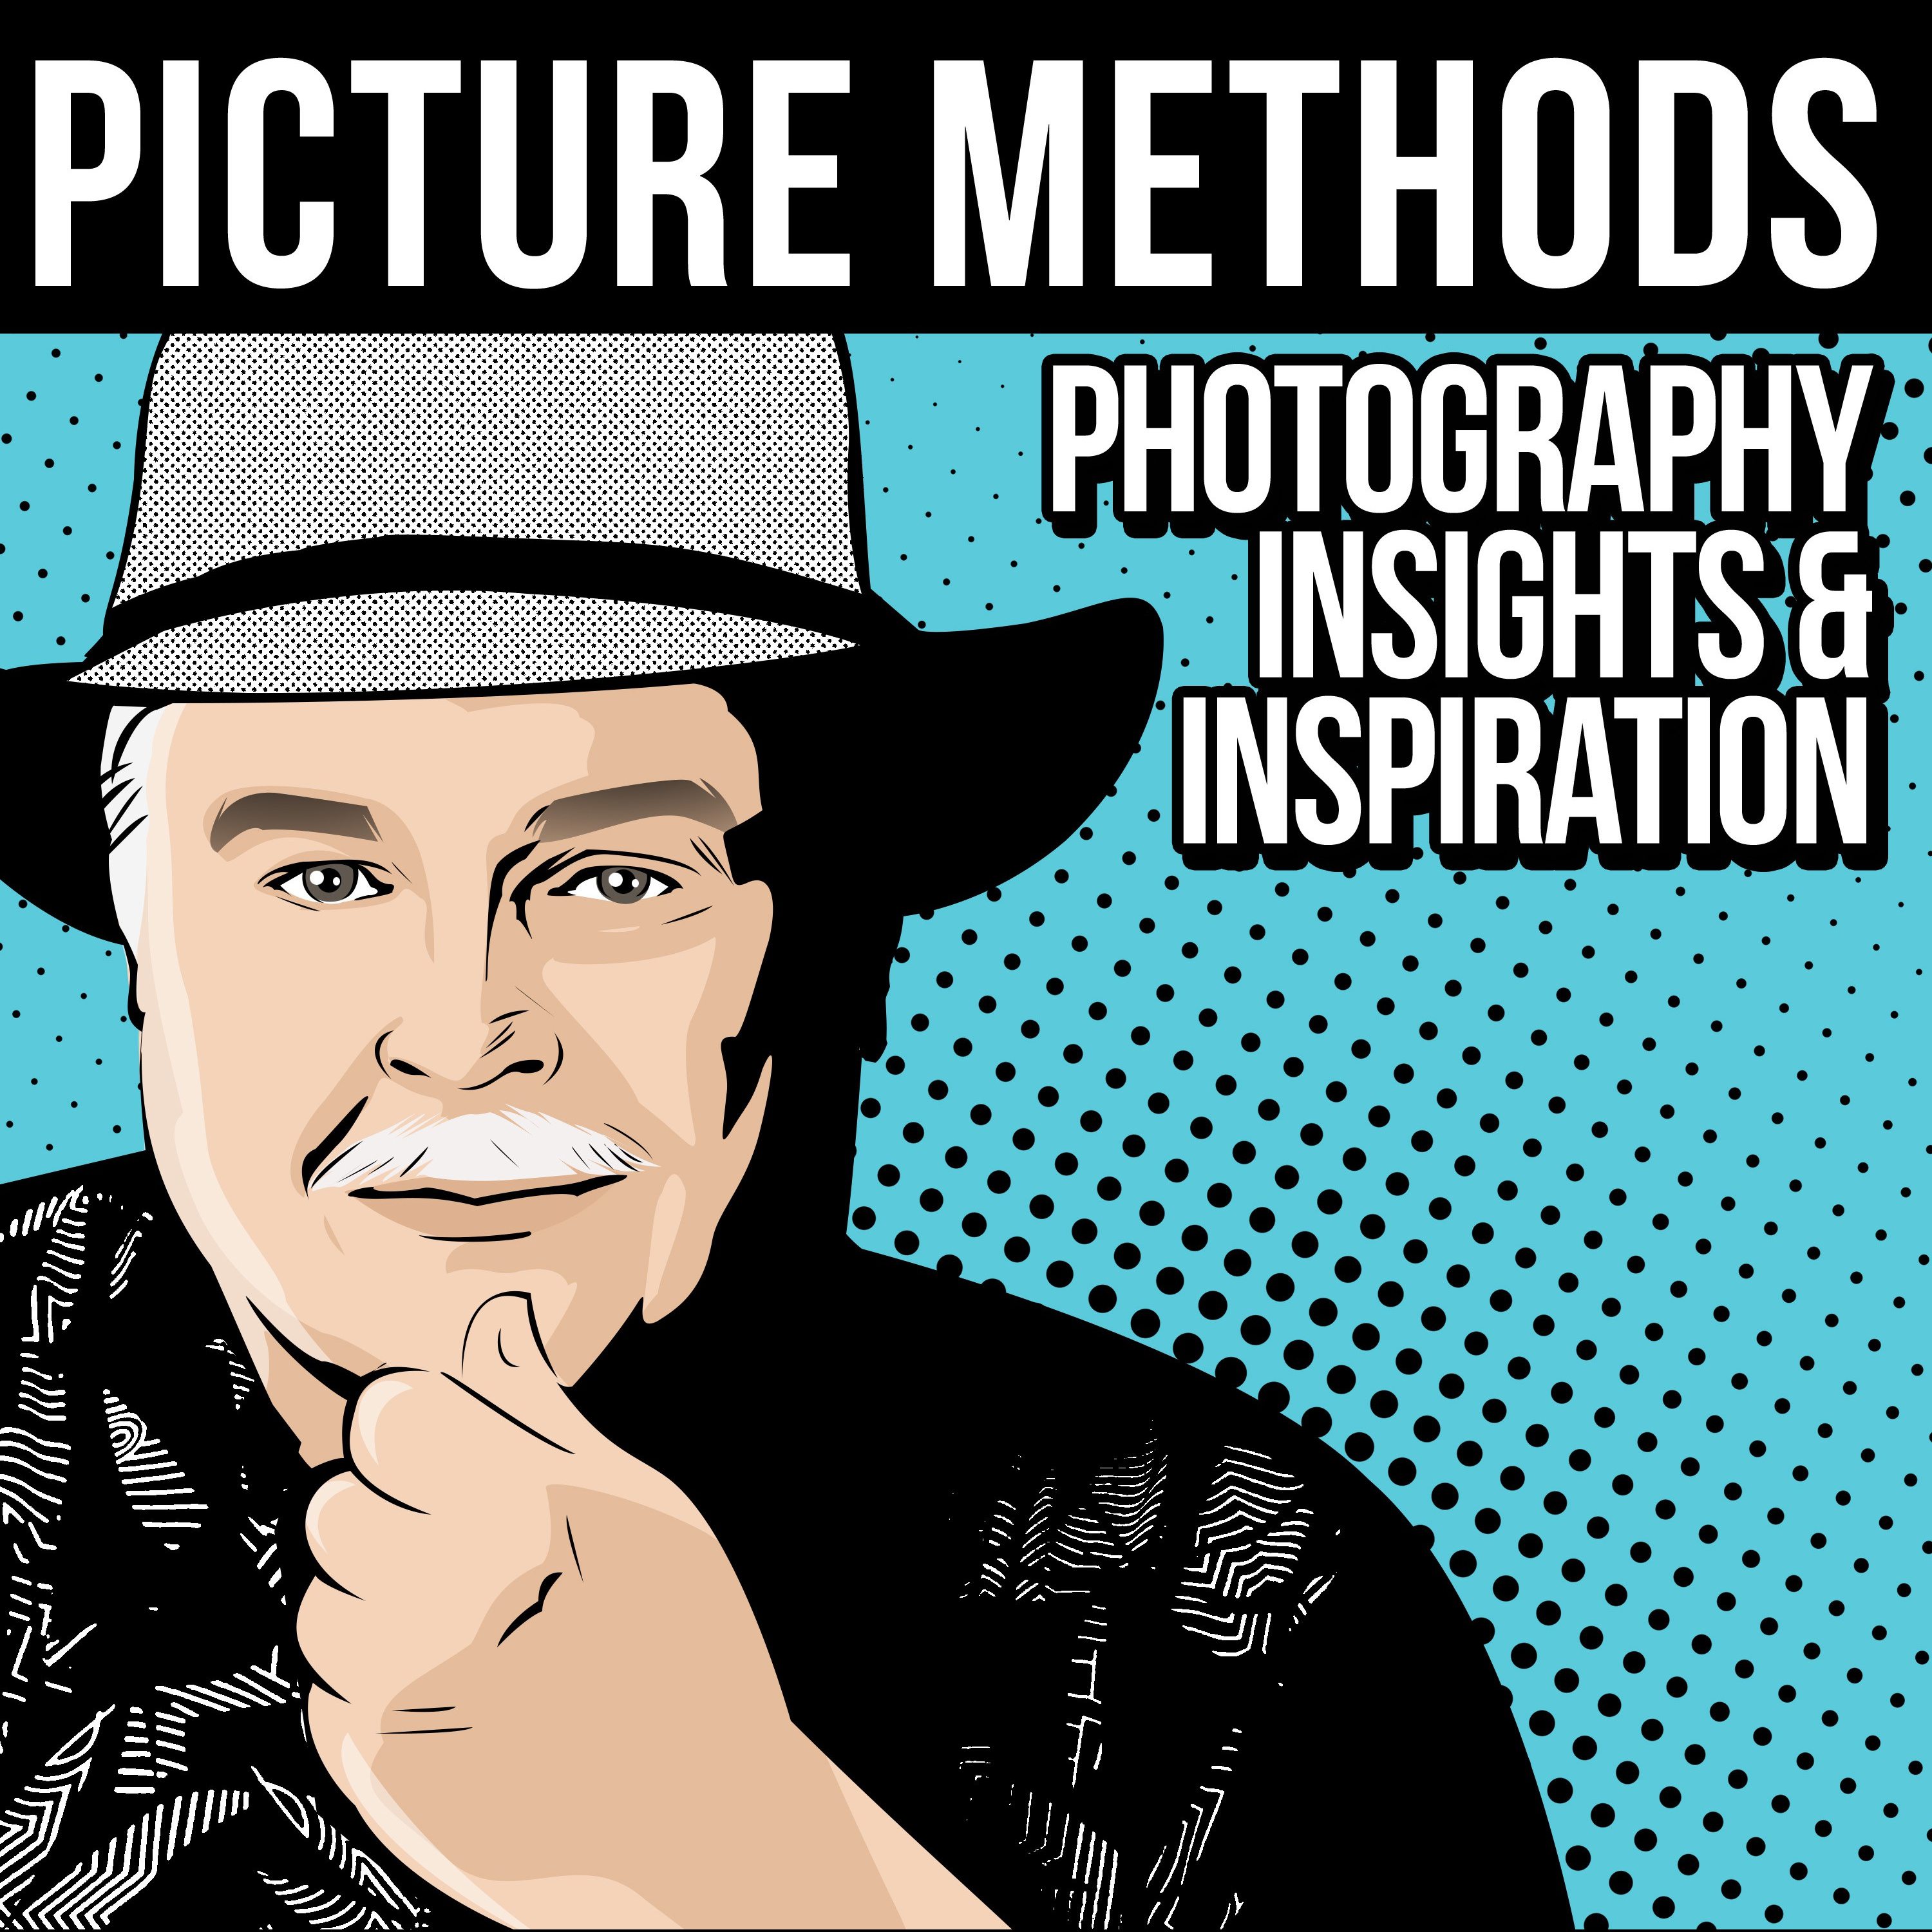 Scott Bourne's Picture Methods Podcast #7